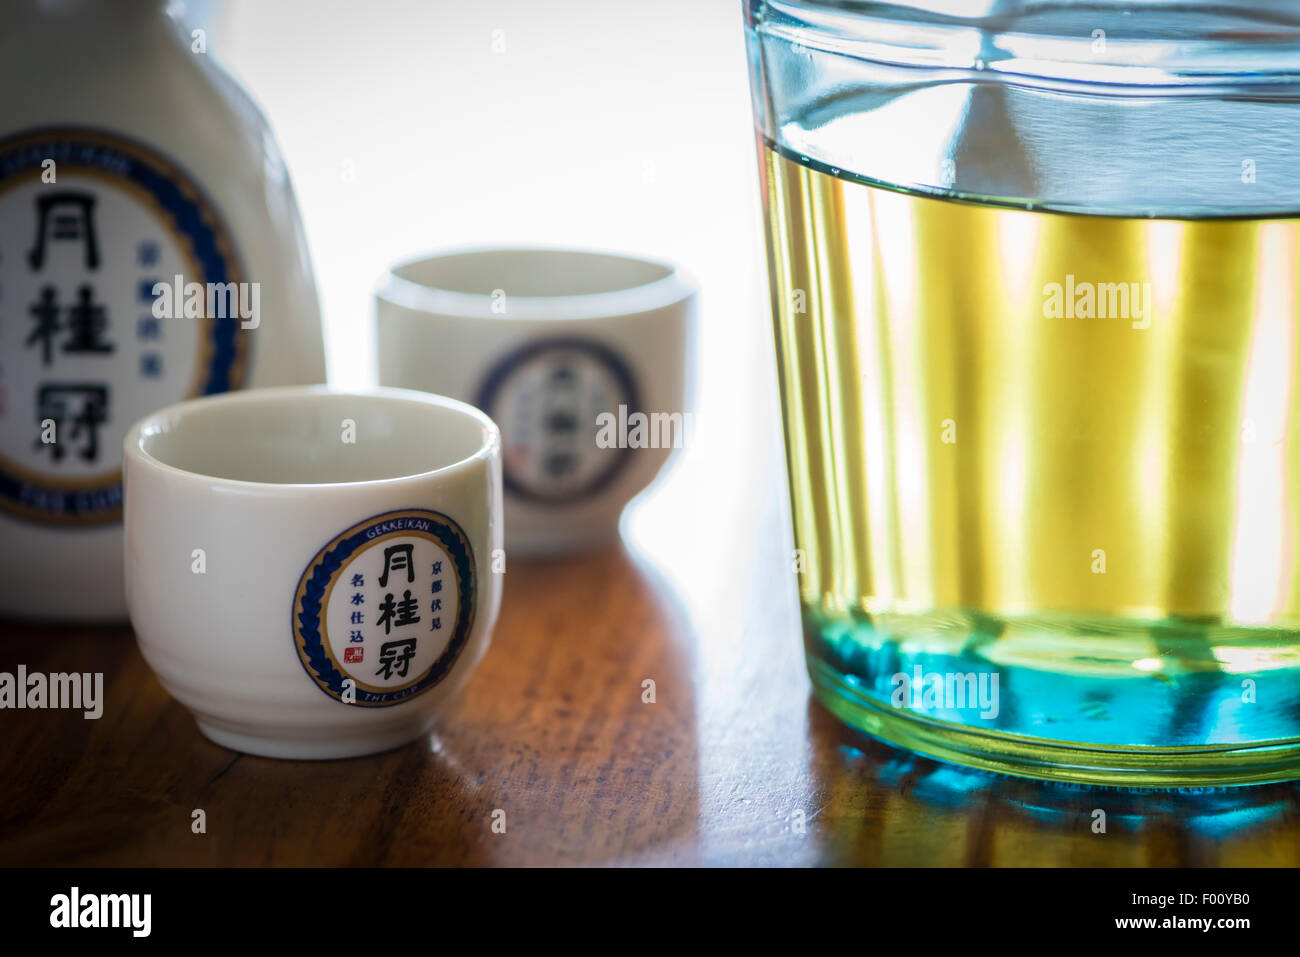 A bottle of Japanese Sake liquor, brewed by the Kyoto Sake brewery Gekkeikan, with ceramic Sake cups bearing the company logo. Stock Photo